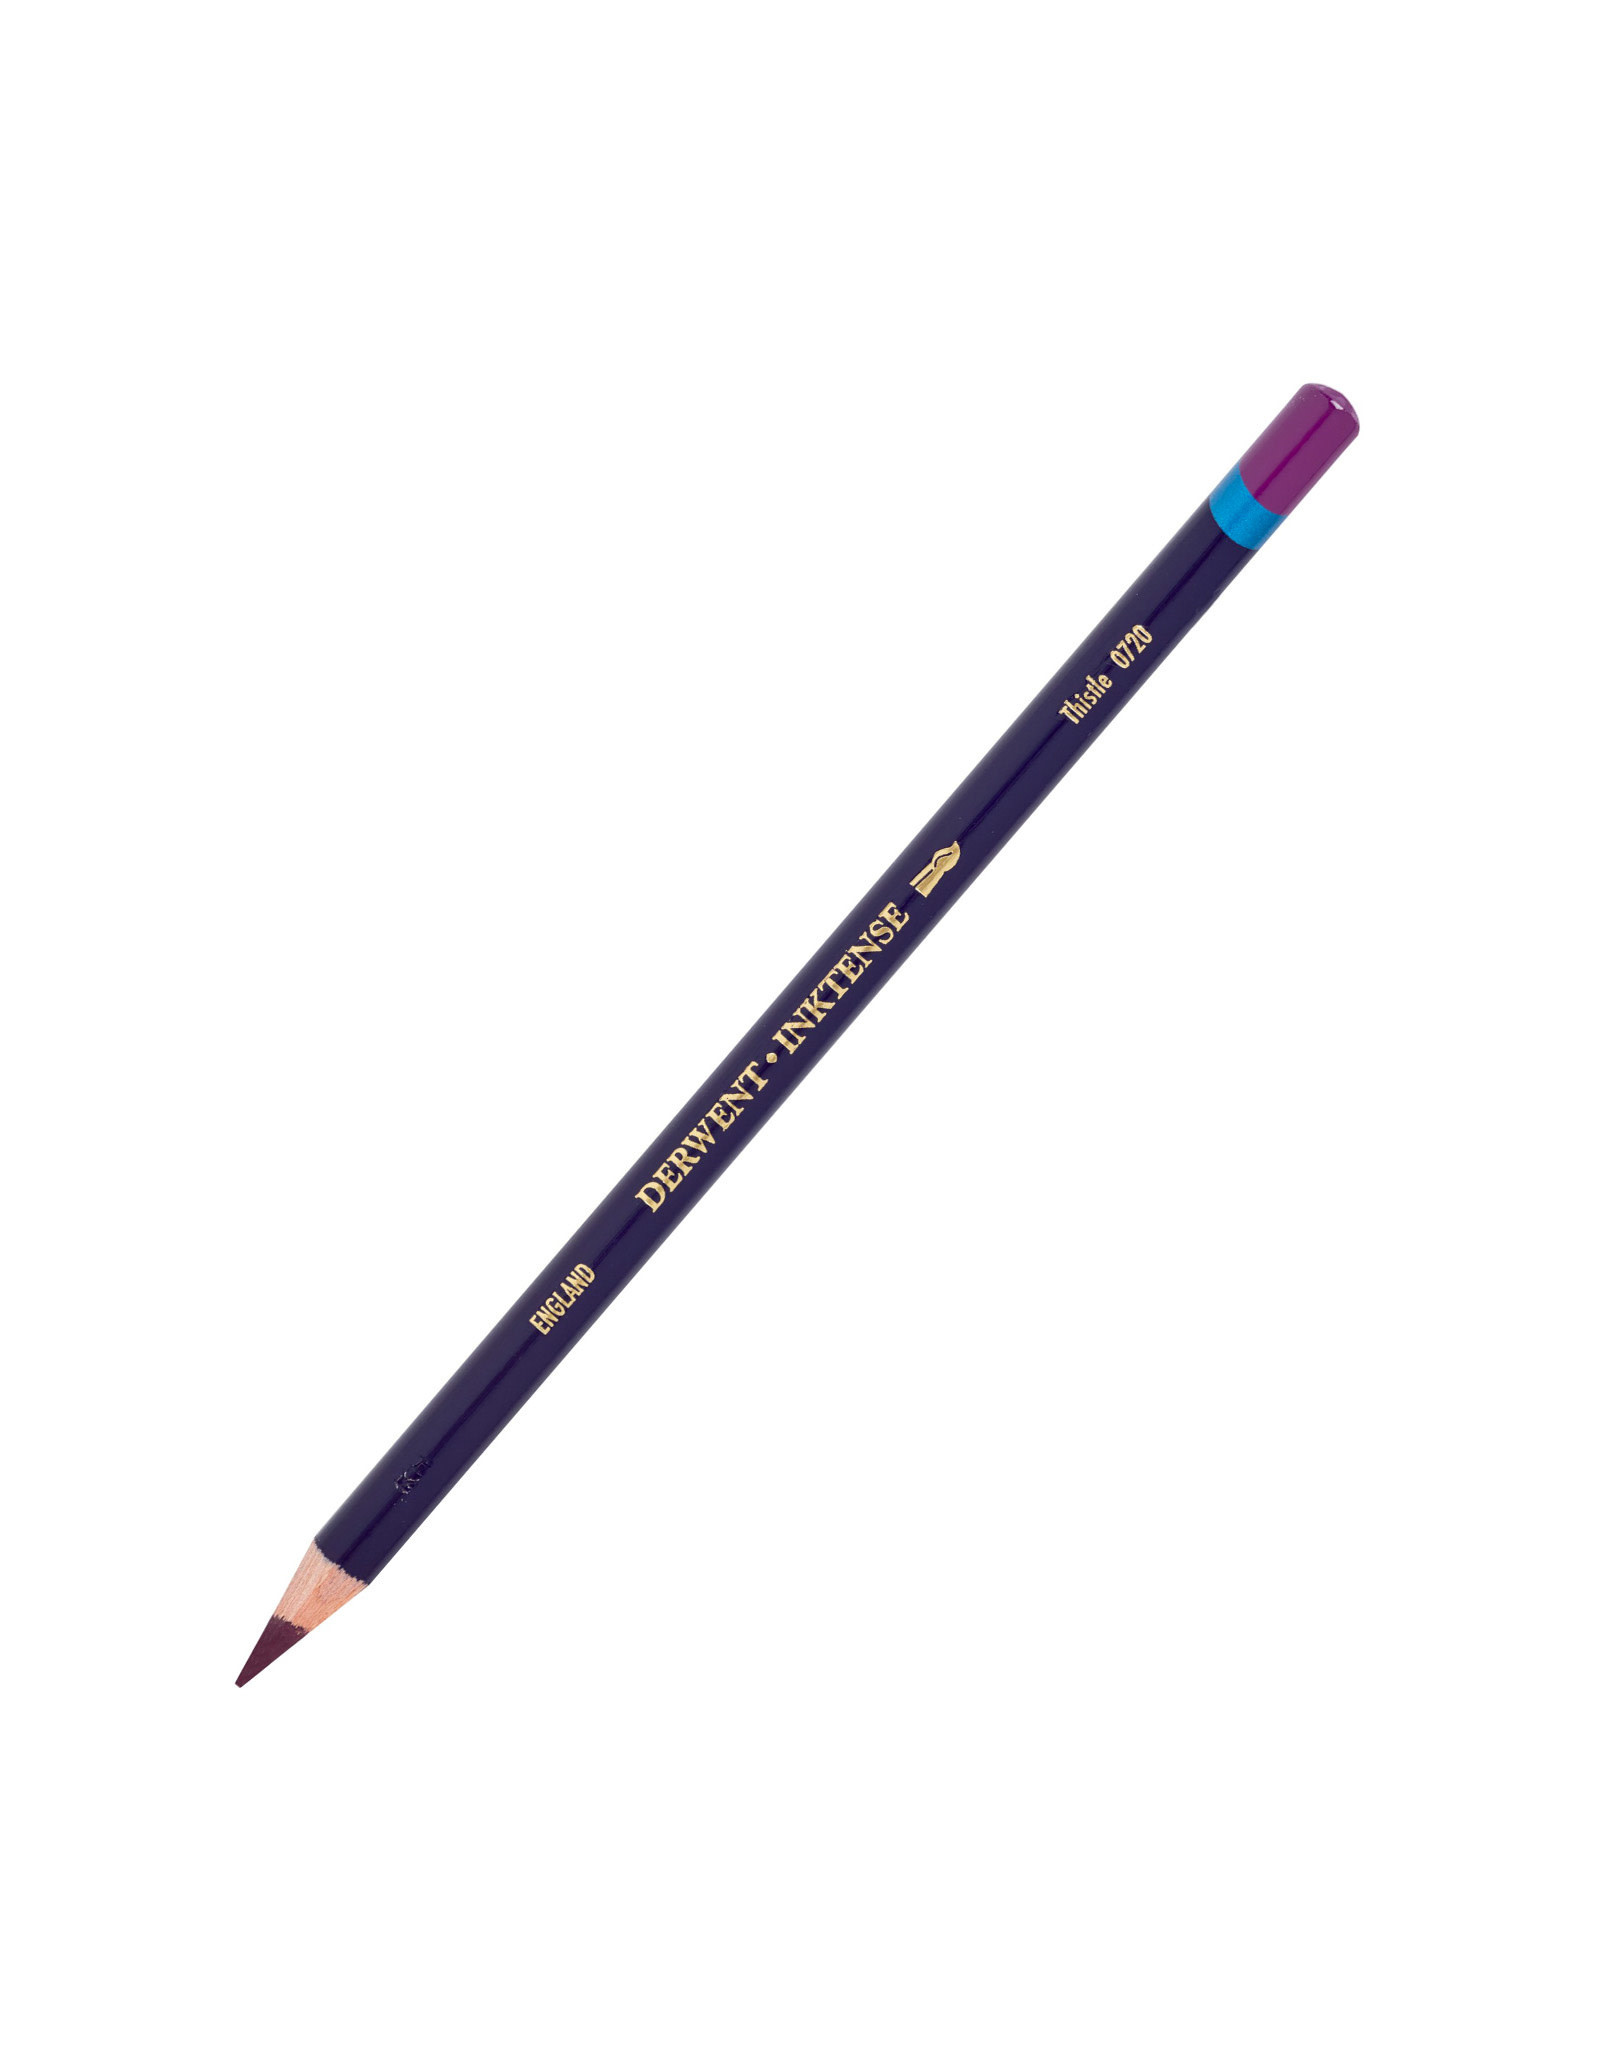 Derwent Inktense Pencil Thistle - The Art Store/Commercial Art Supply